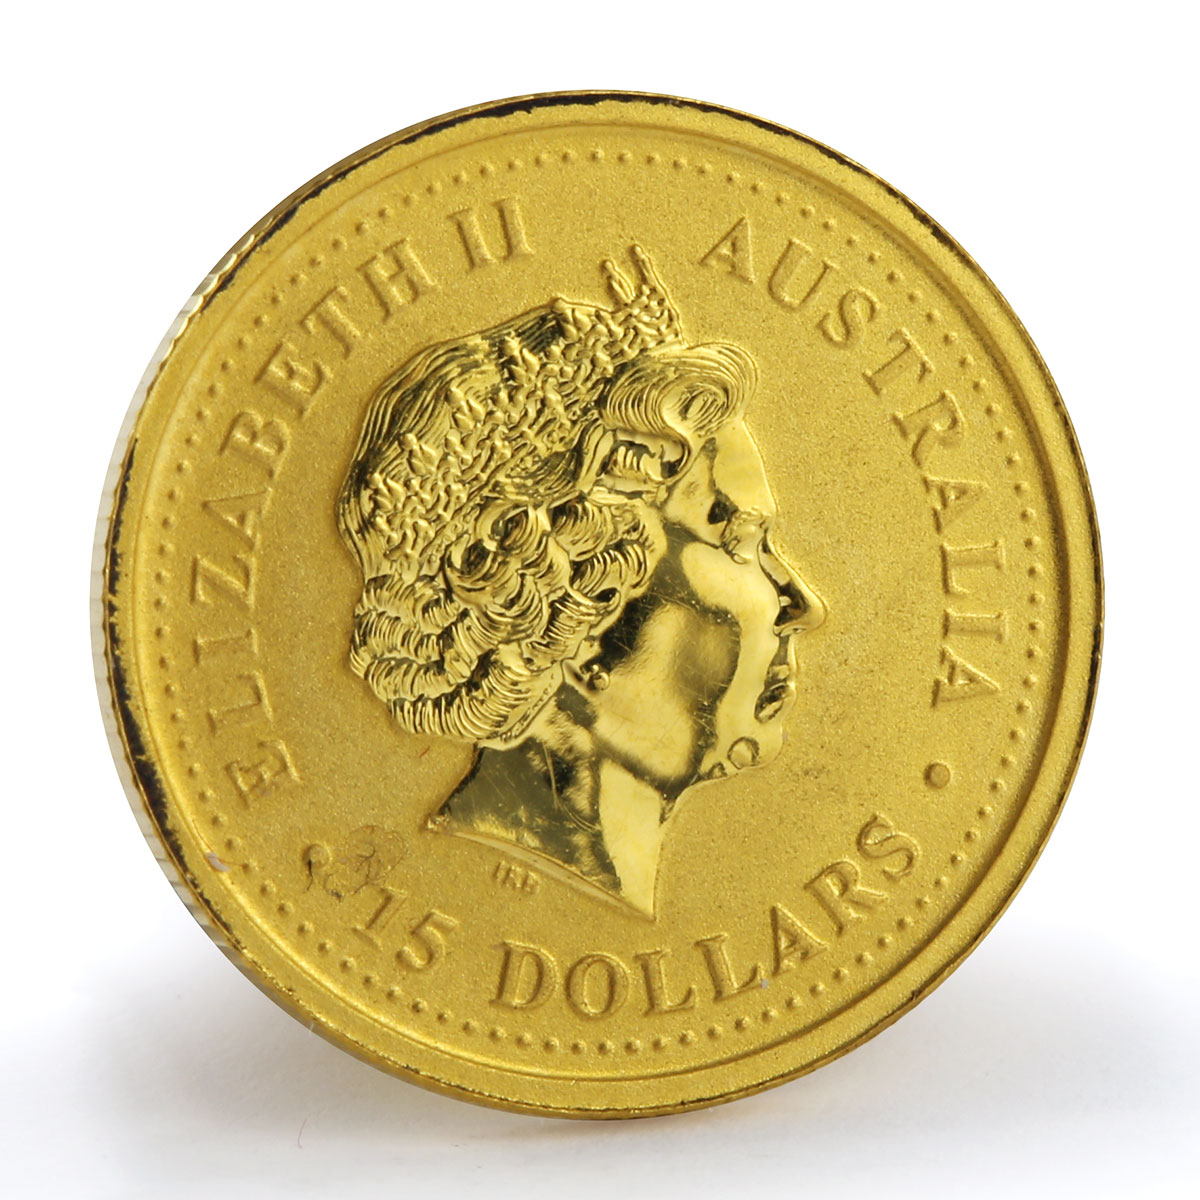 Australia 15 dollars Lunar calendar Year of Dog colored gold coin 1/10 oz 2006